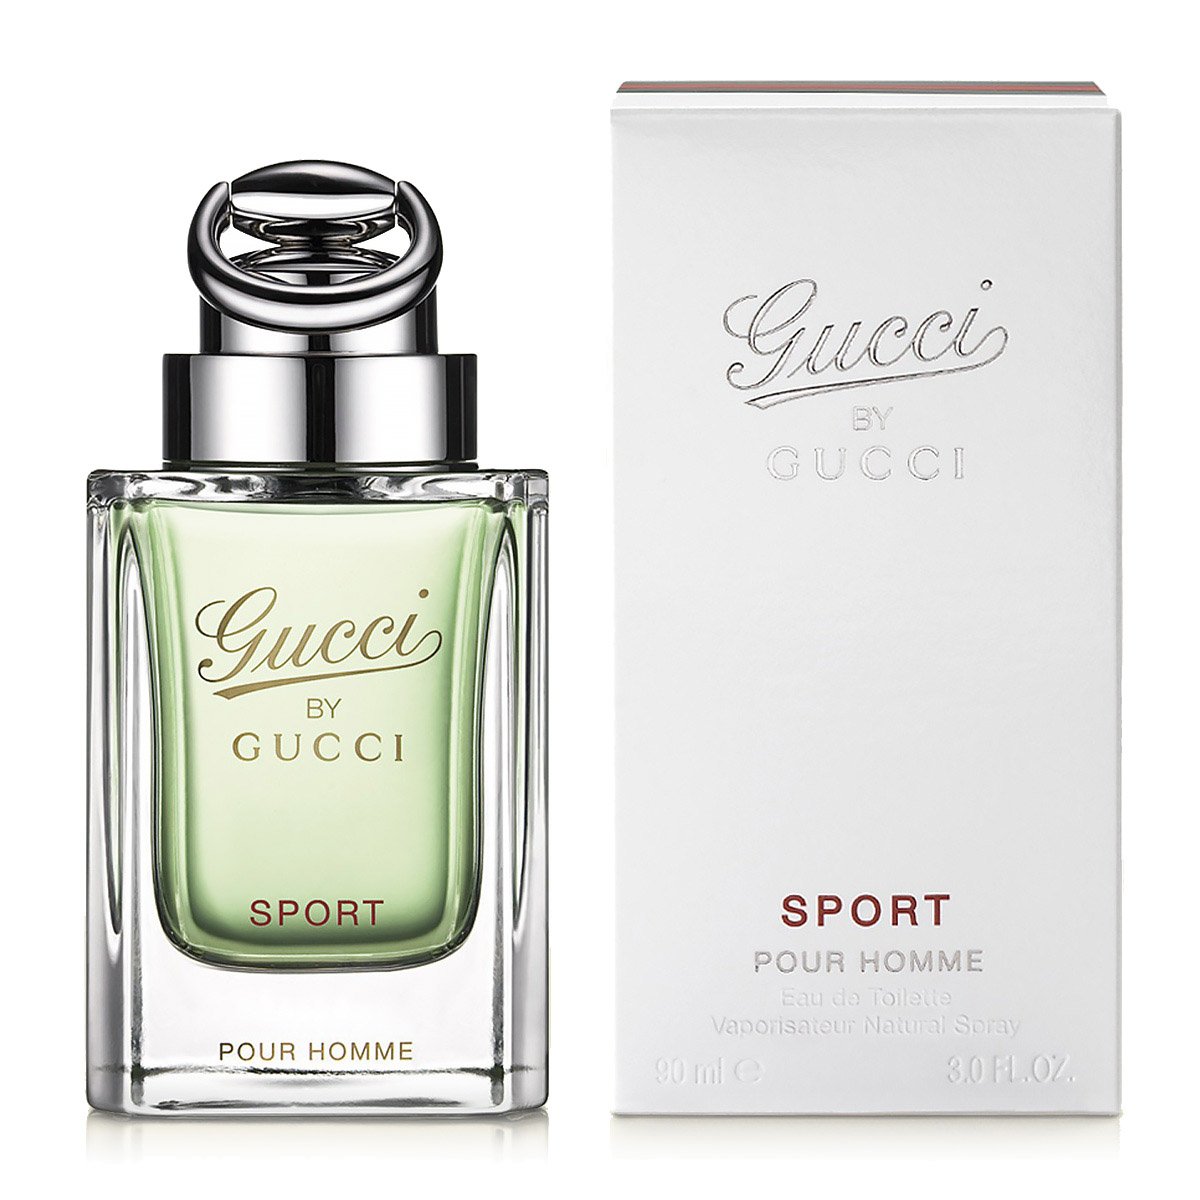 Gucci homme купить. Gucci by Gucci Sport pour homme (Gucci). Gucci by Gucci Sport. Gucci by Gucci Sport pour homme 90ml. Gucci by Gucci Sport 90 мл.